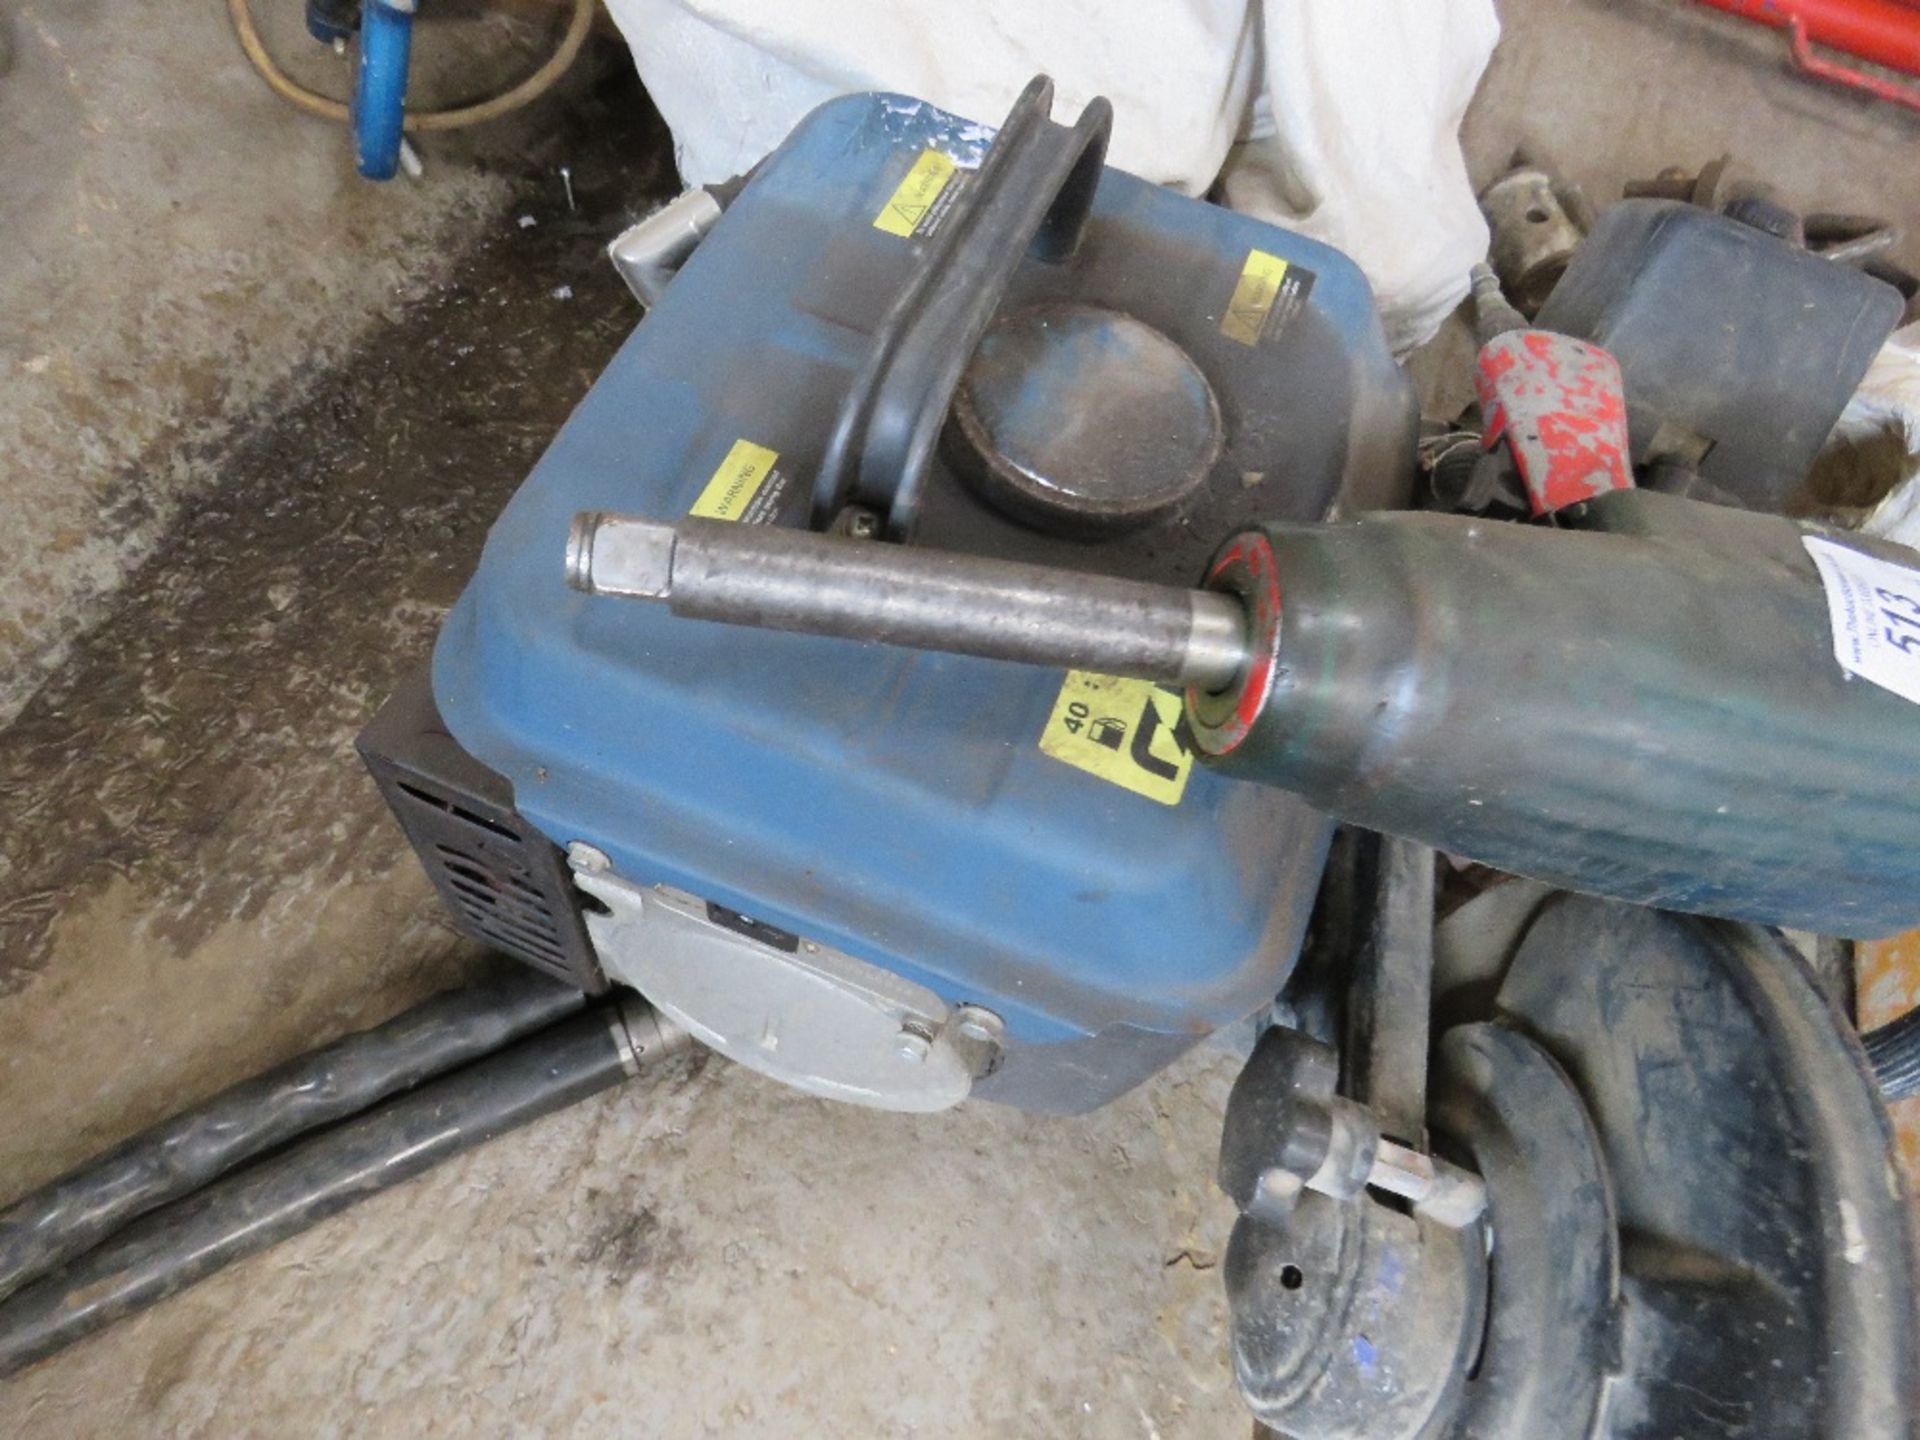 Blue camping generator, saw and air nut gun - Image 2 of 3